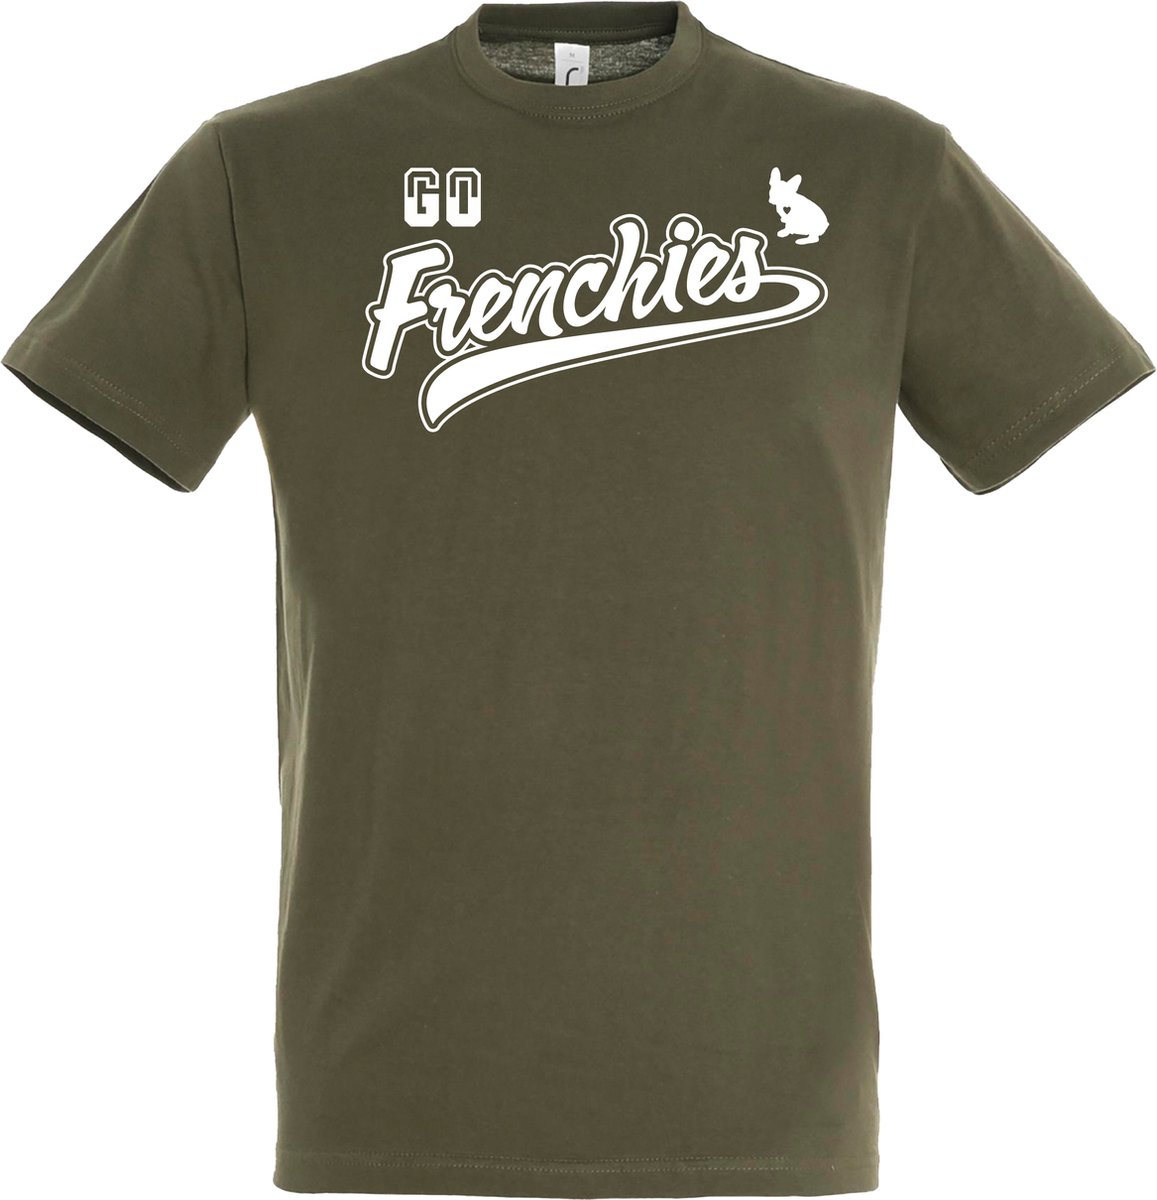 Plenty Gifts T-shirt GO Frenchies Army M